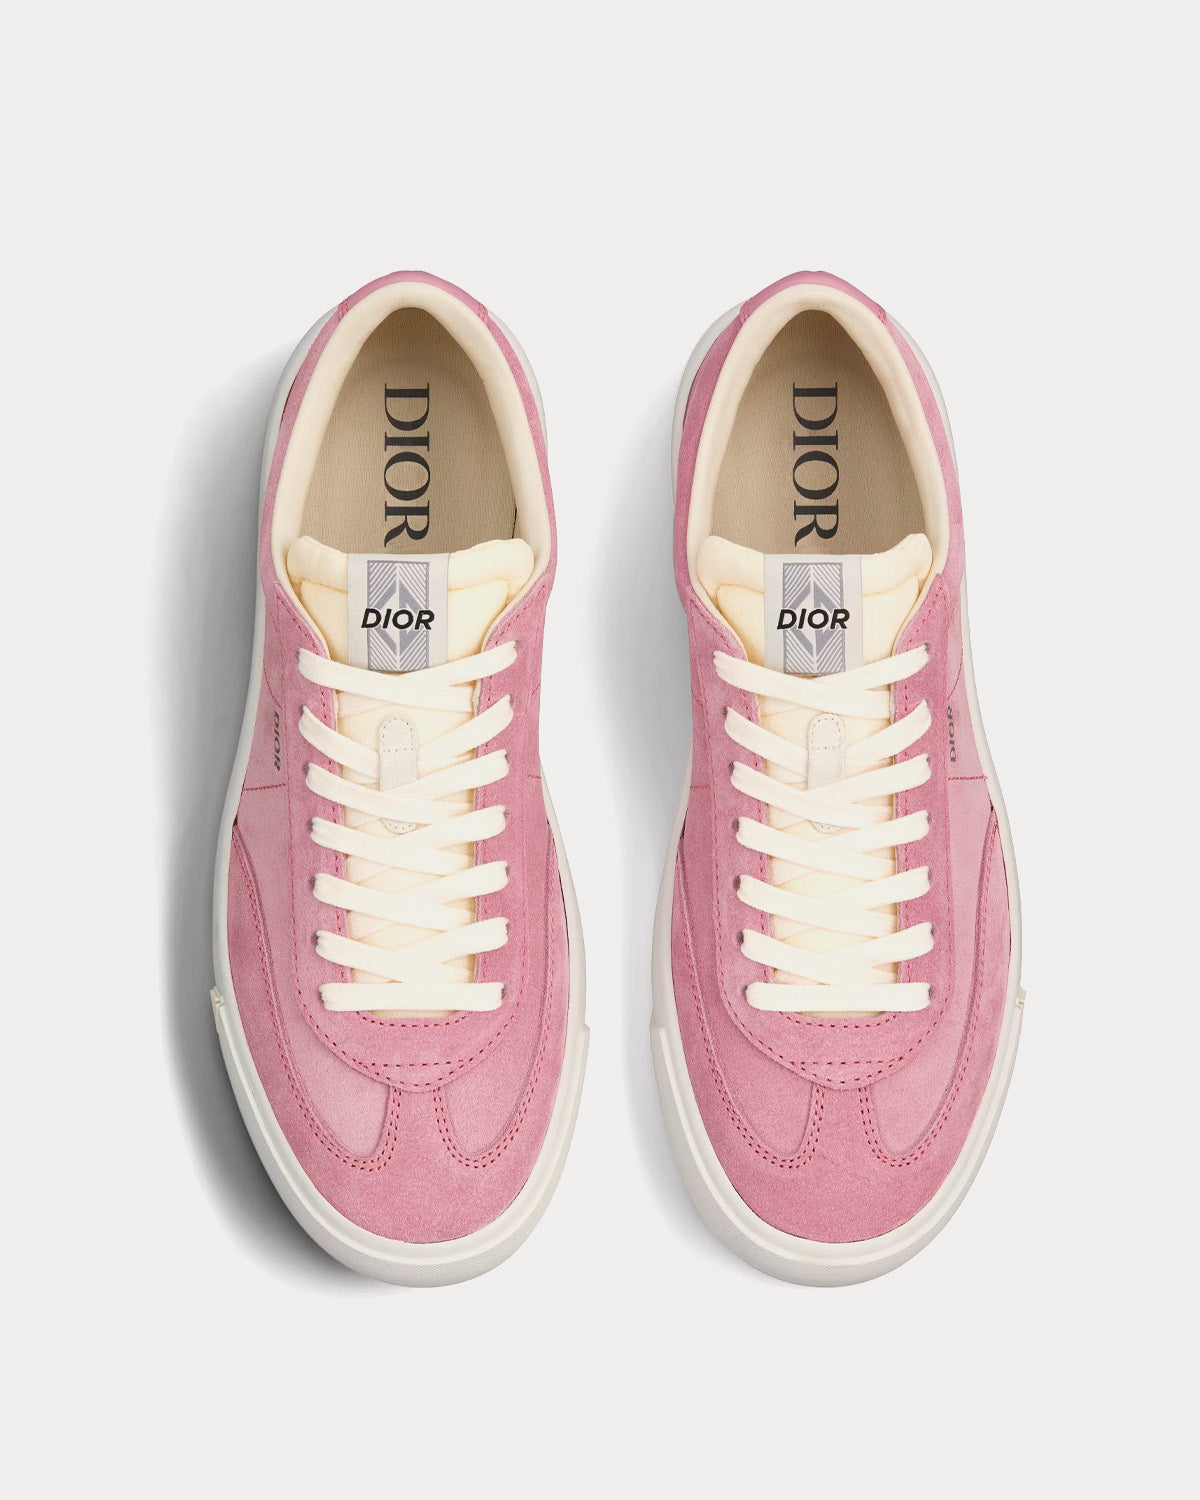 Dior - B101 Nubuck Calfskin Pink Low Top Sneakers